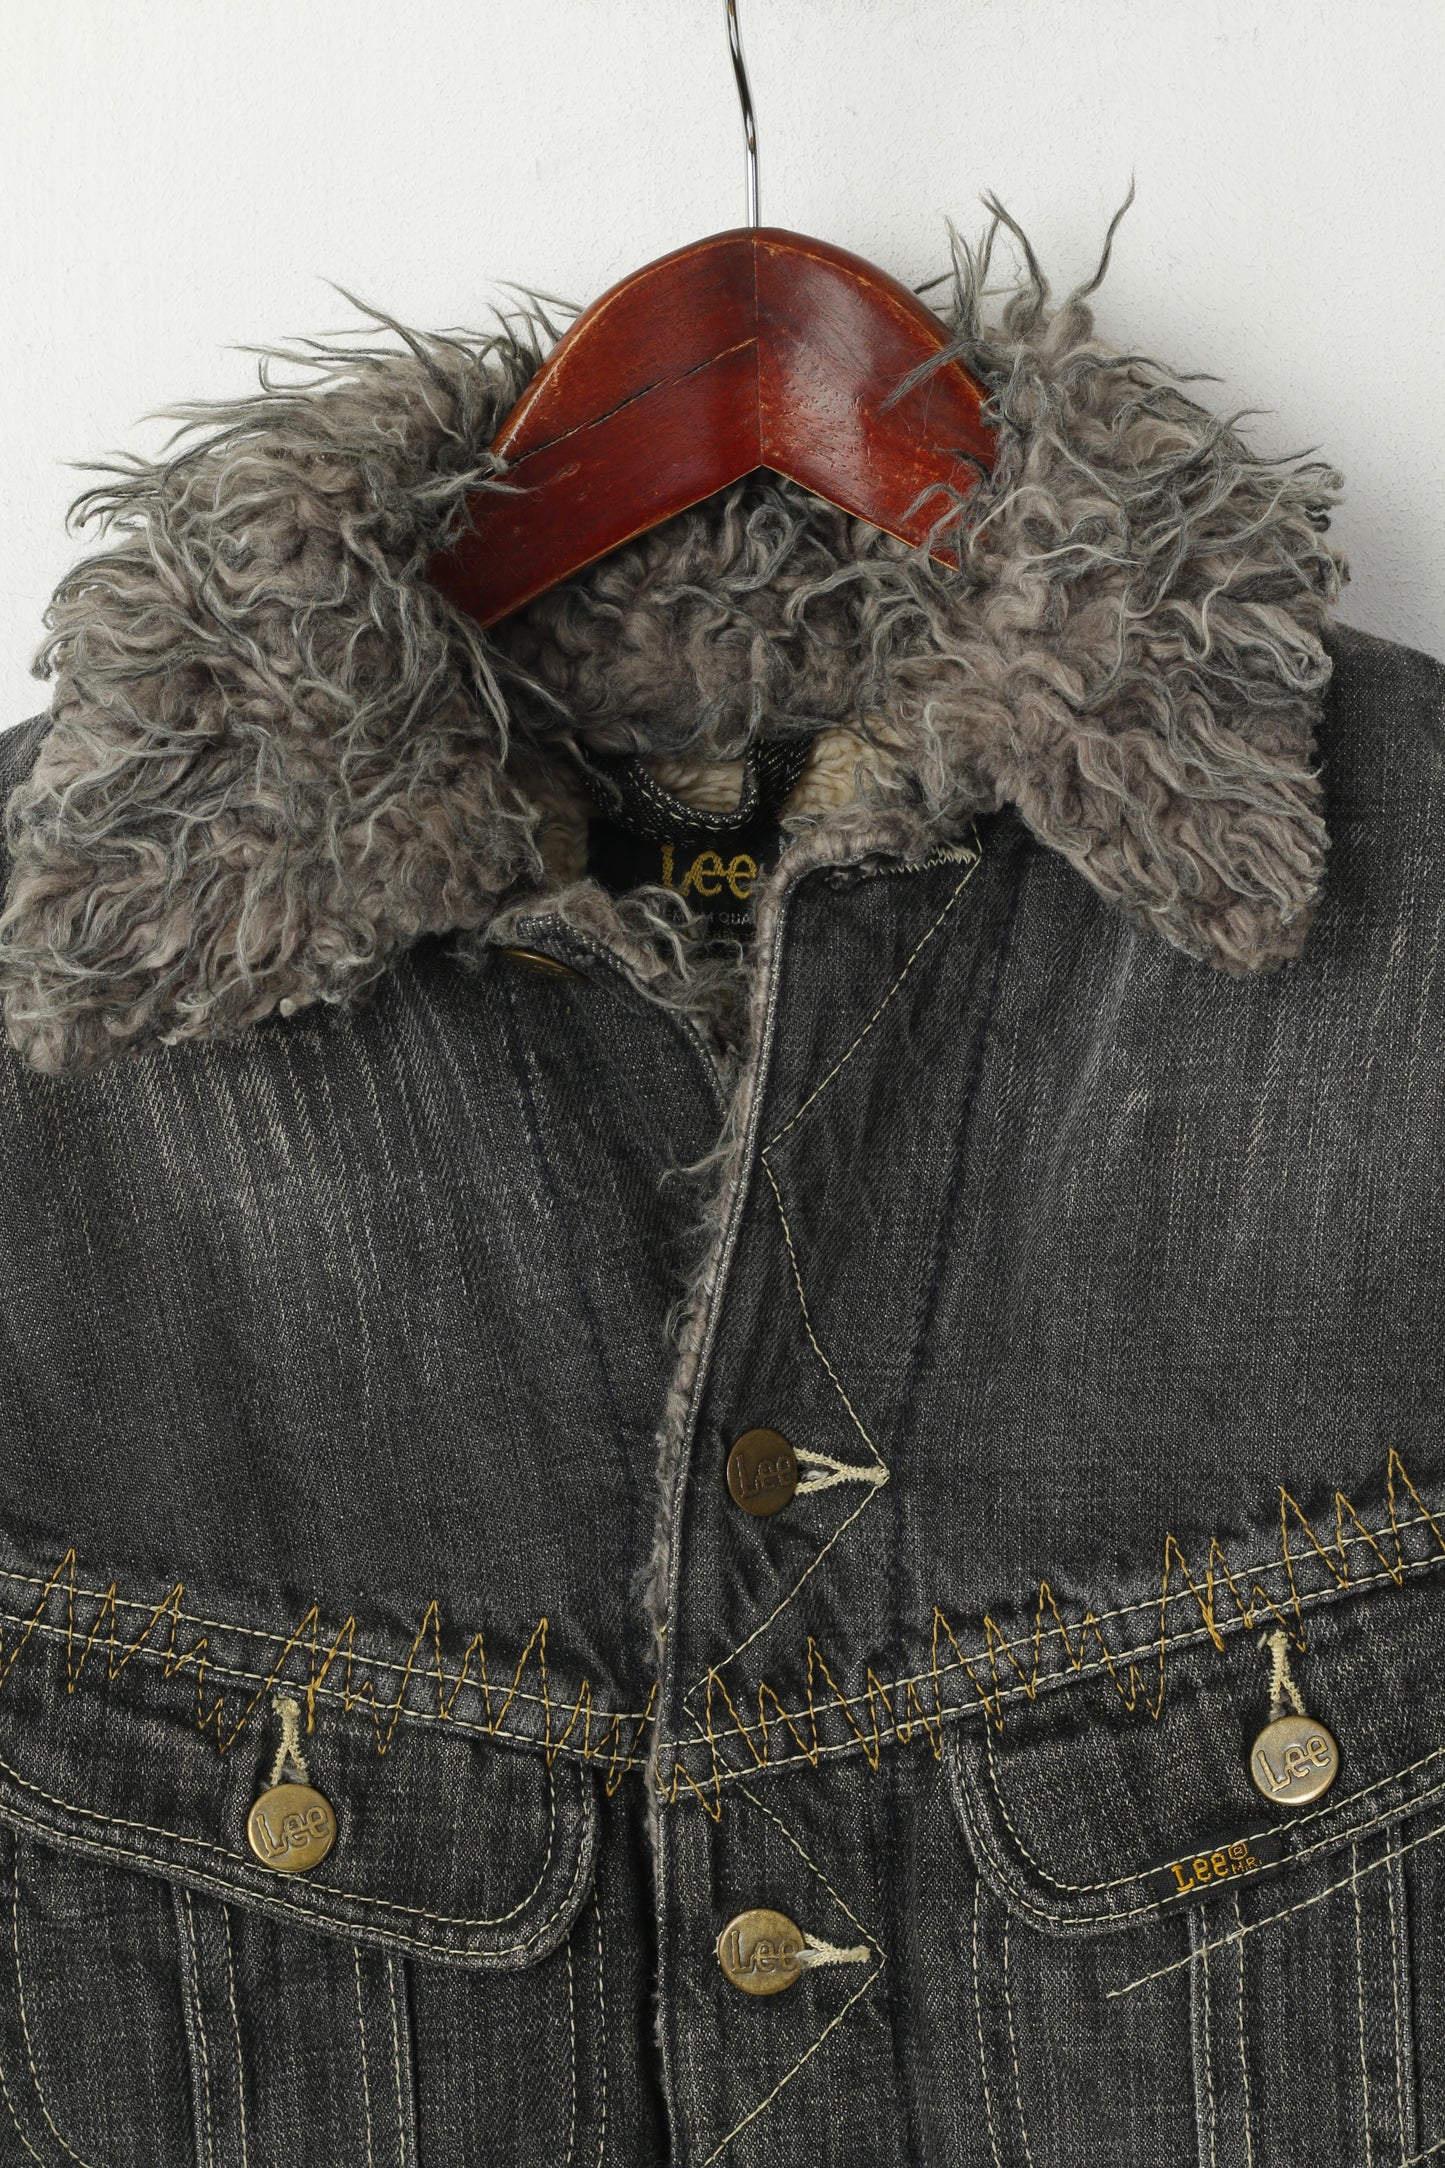 Lee Women M Jacket Grey Cotton Denim Jeans Furry Lined Trucker Cropped Top